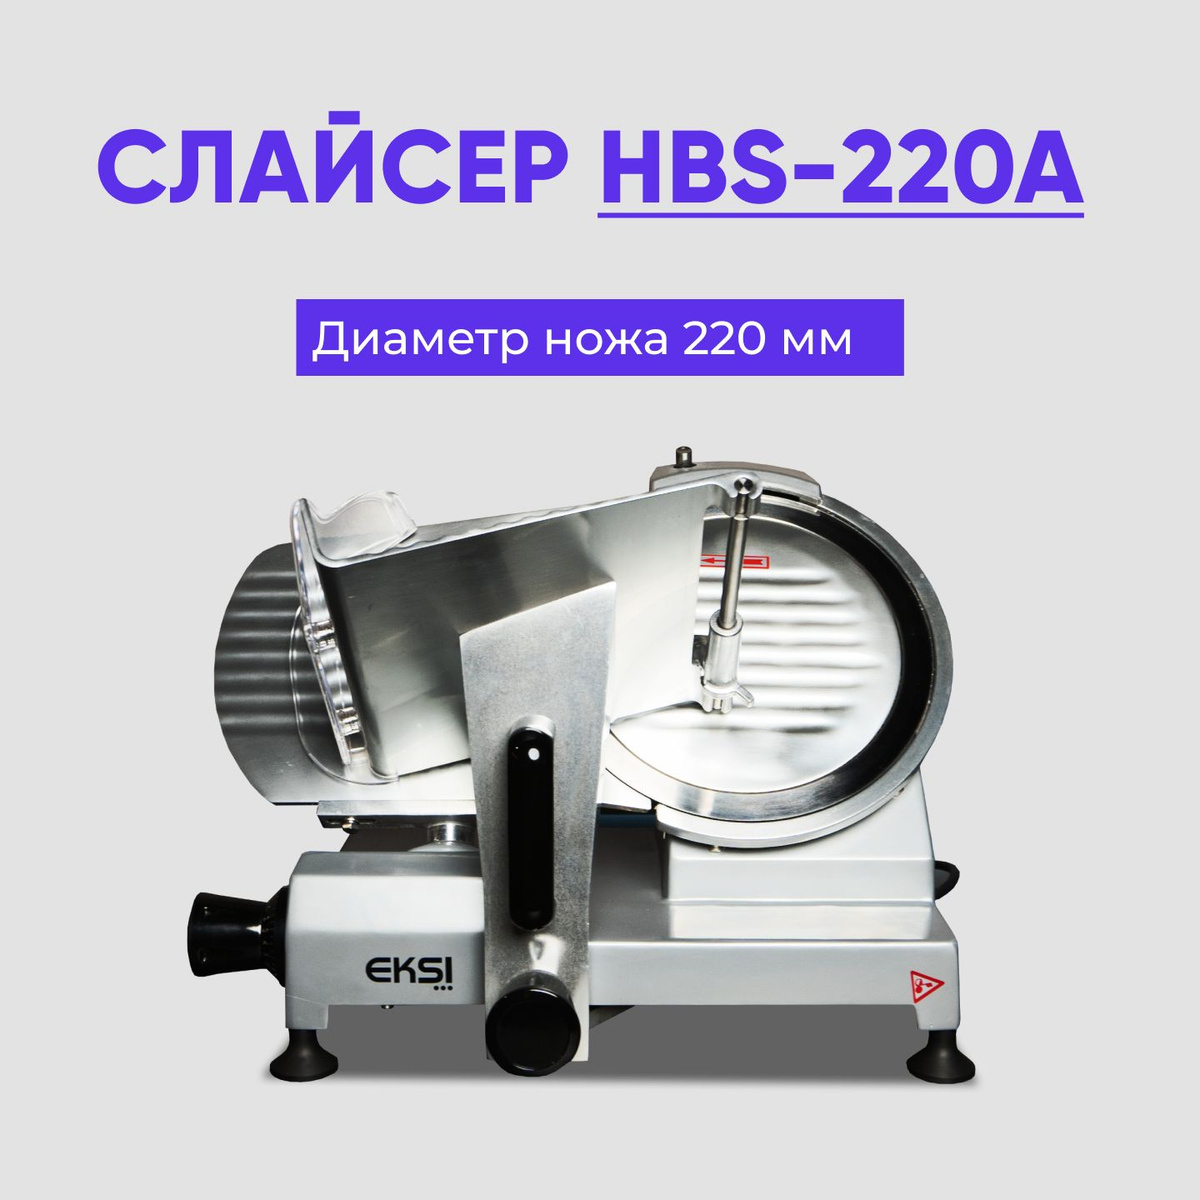 EKSI HBS-220A